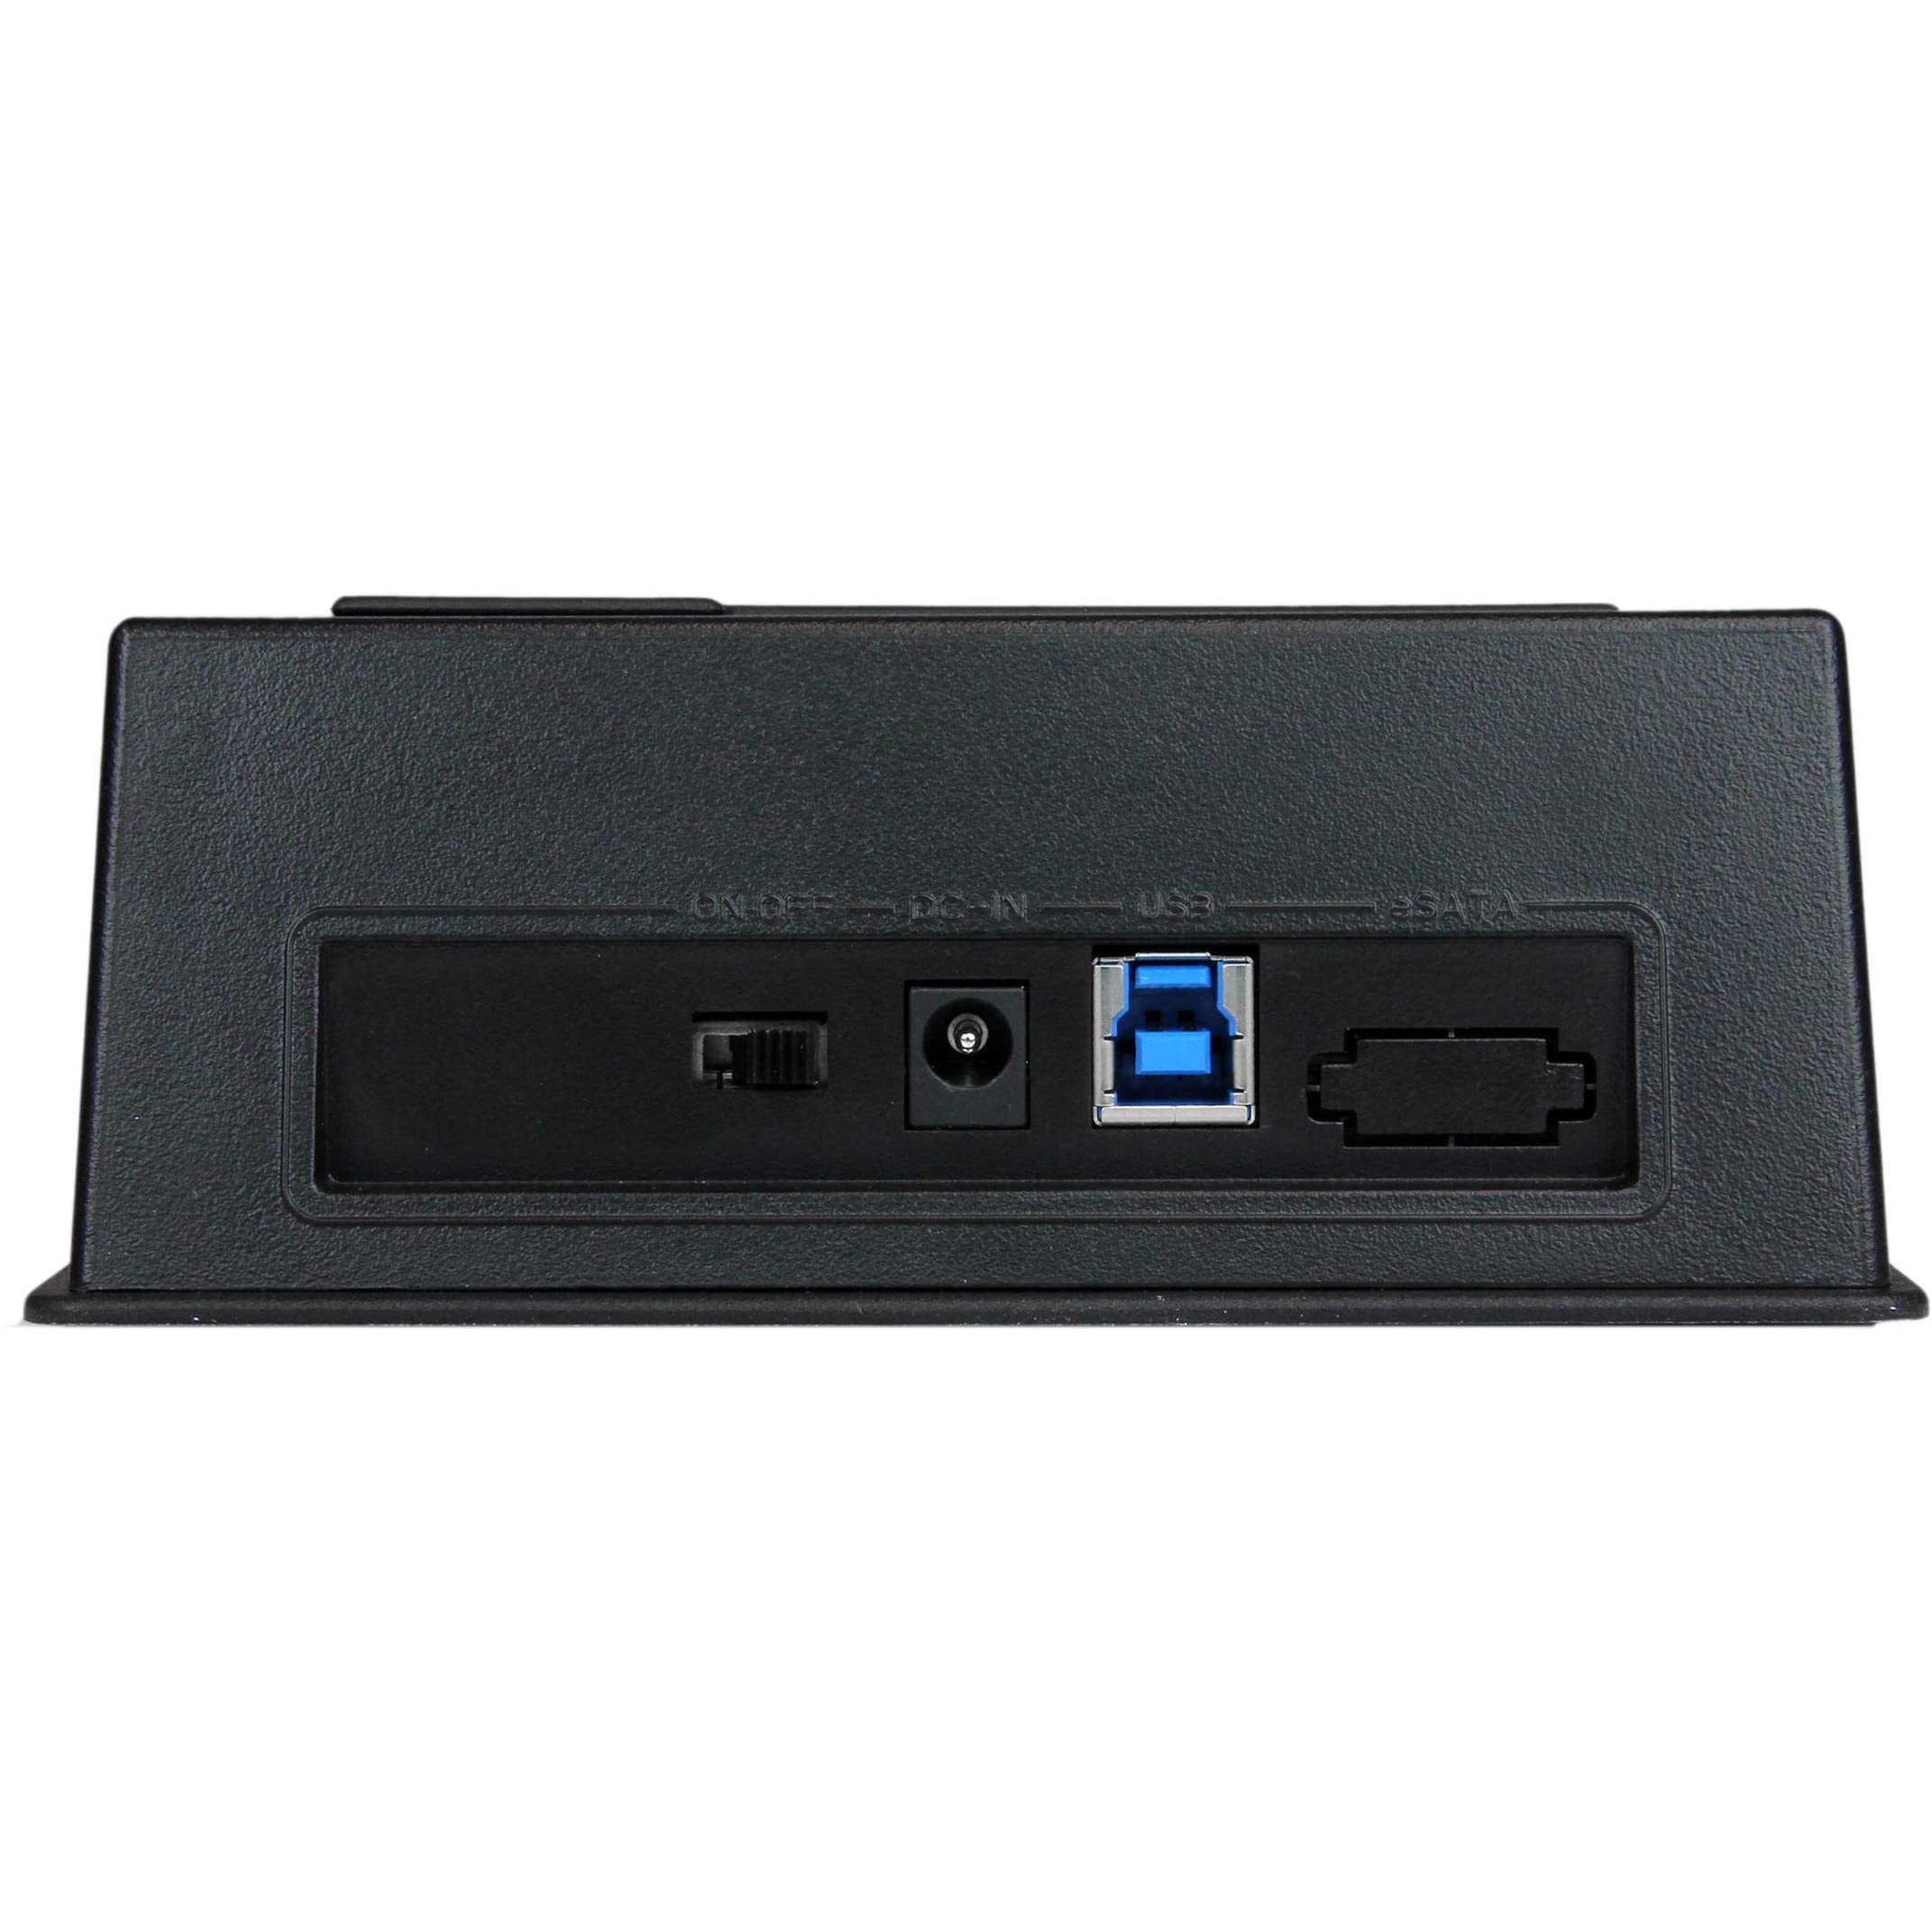 StarTech.com Single Bay USB 3.0 to SATA Hard Drive Docking Station, USB 3.0 (5 Gbps) Hard Drive Dock, External 2.5/3.5